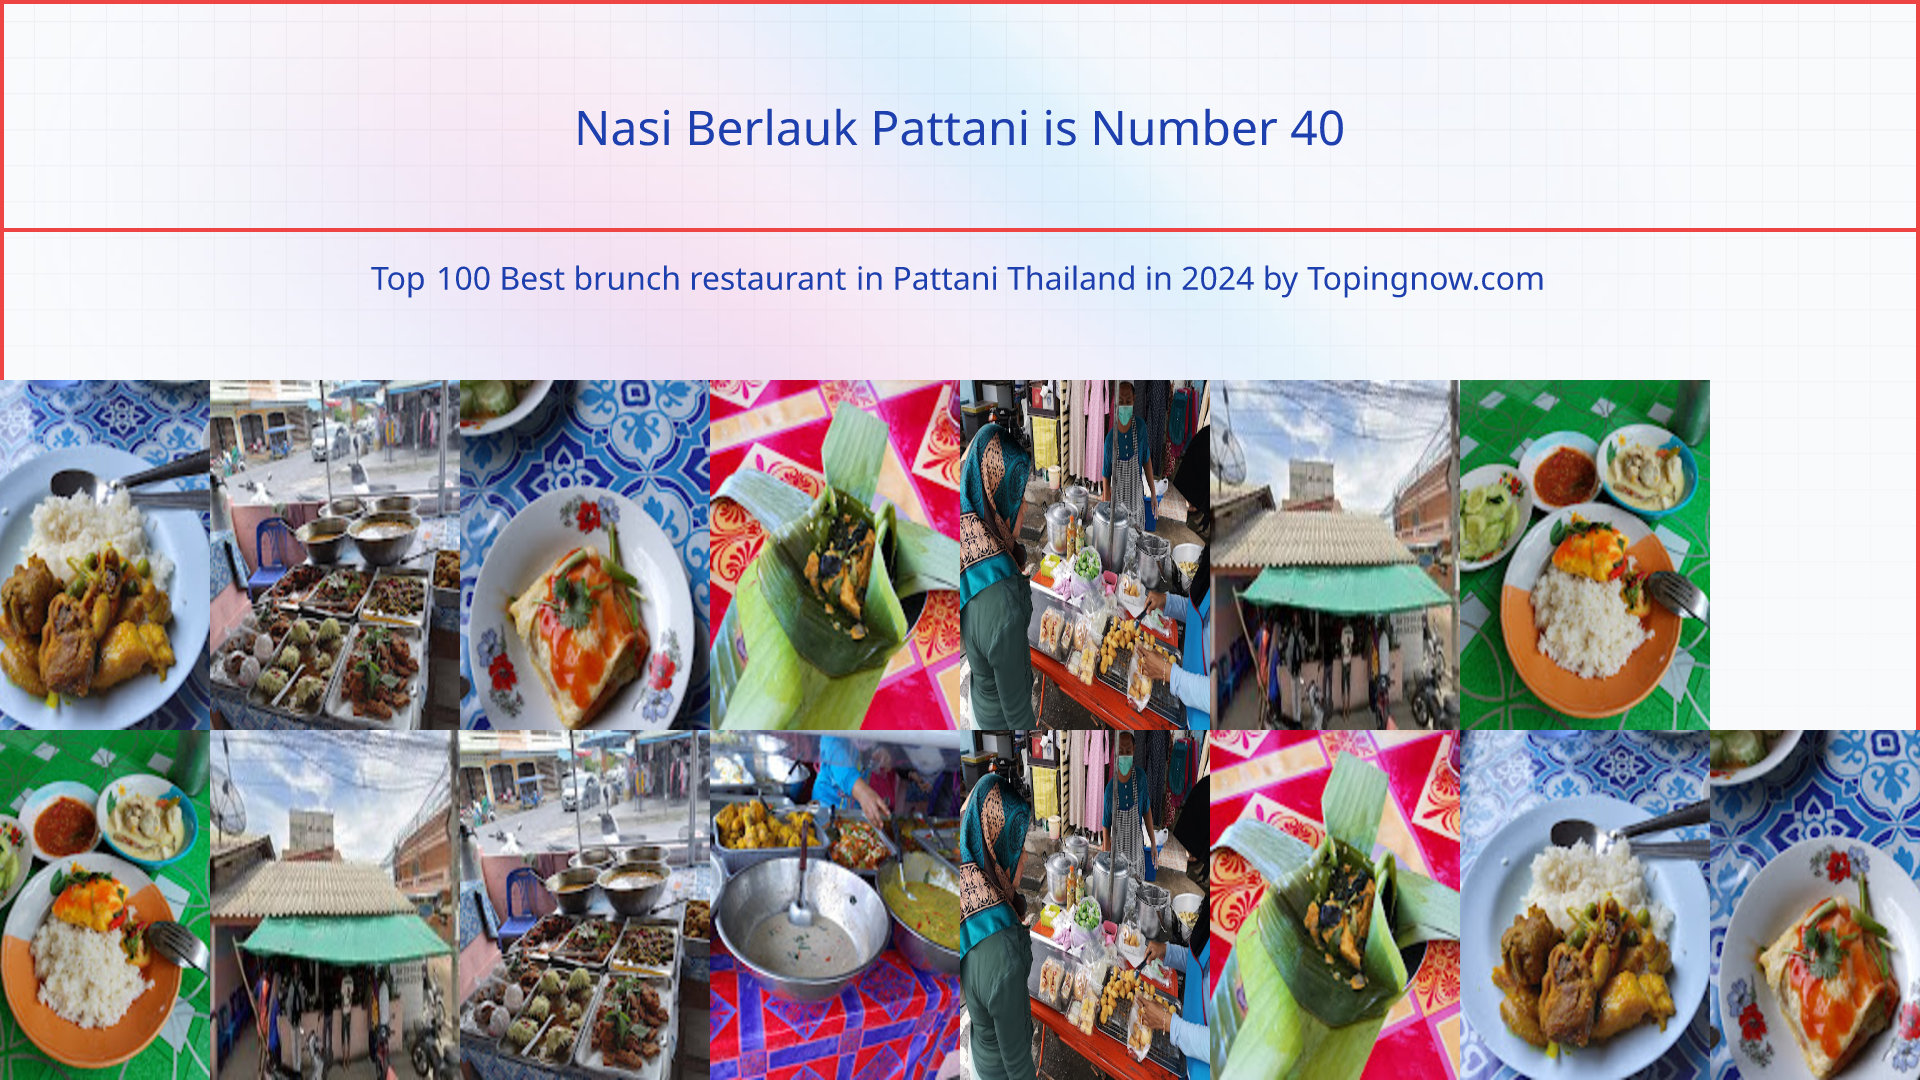 Nasi Berlauk Pattani: Top 100 Best brunch restaurant in Pattani Thailand in 2024